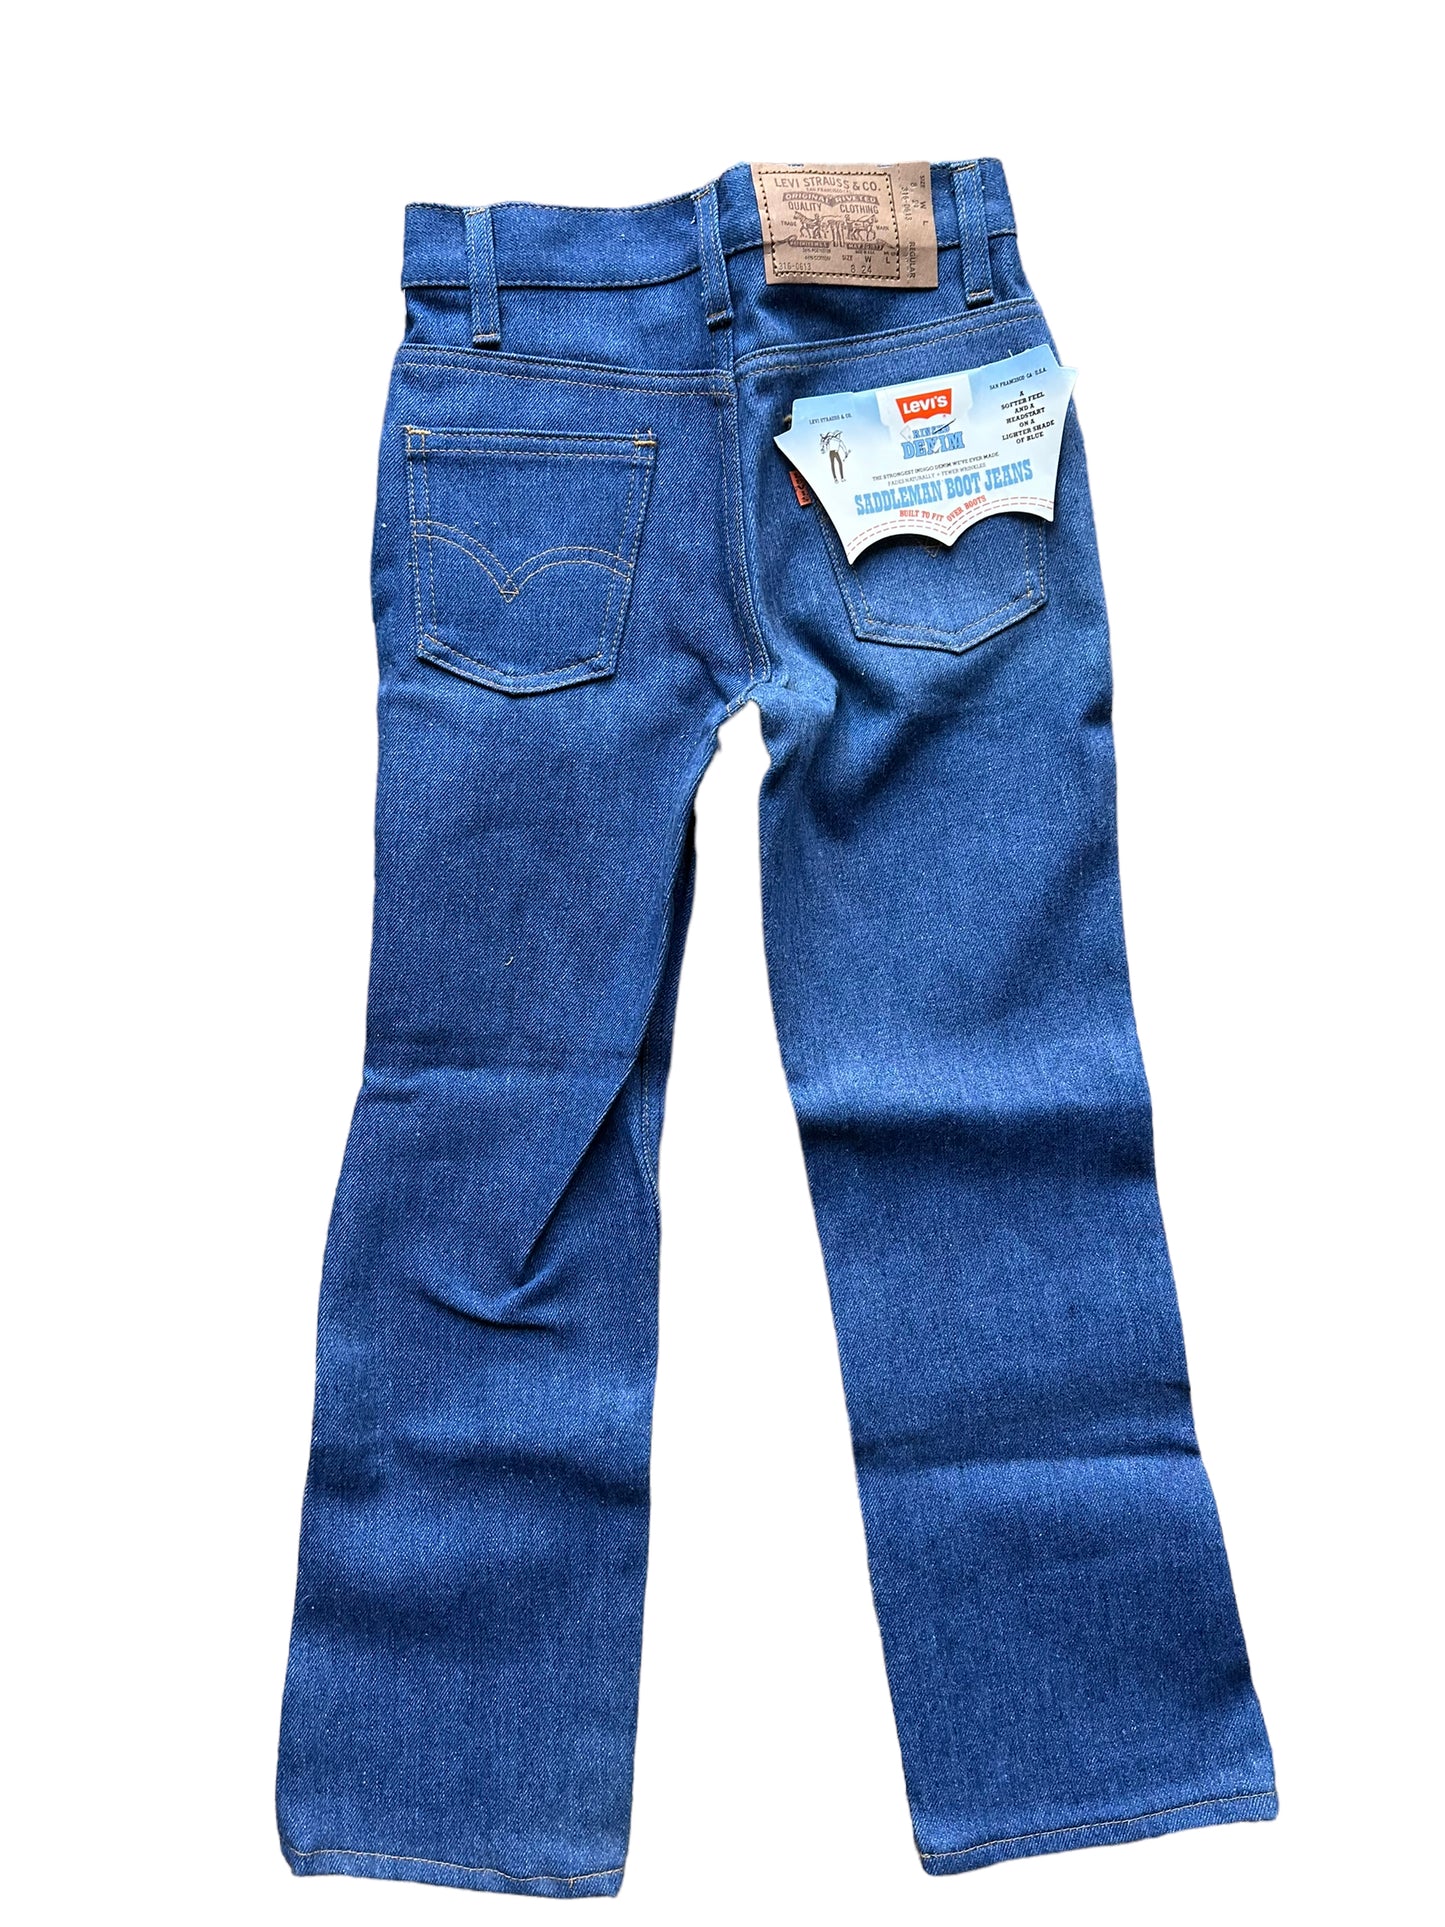 Full back view of Vintage Deadstock Saddleman Boot Cut Jeans 24x23 | Seattle Kid's Vintage | Barn Owl Deadstock Levi's